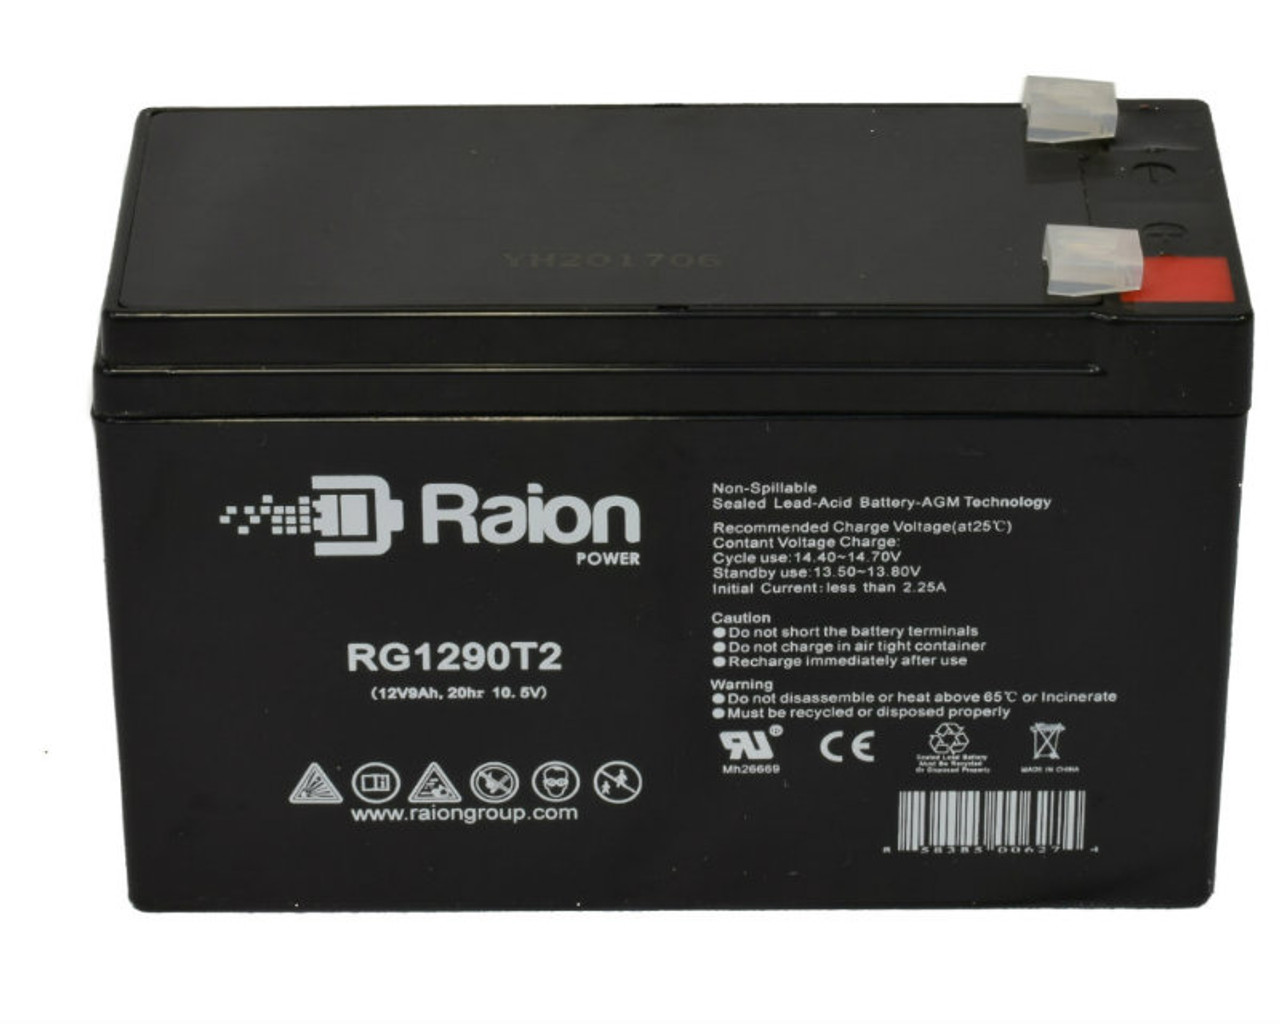 Raion Power RG1290T2 12V 9Ah Lead Acid Battery for Consent GS128-5